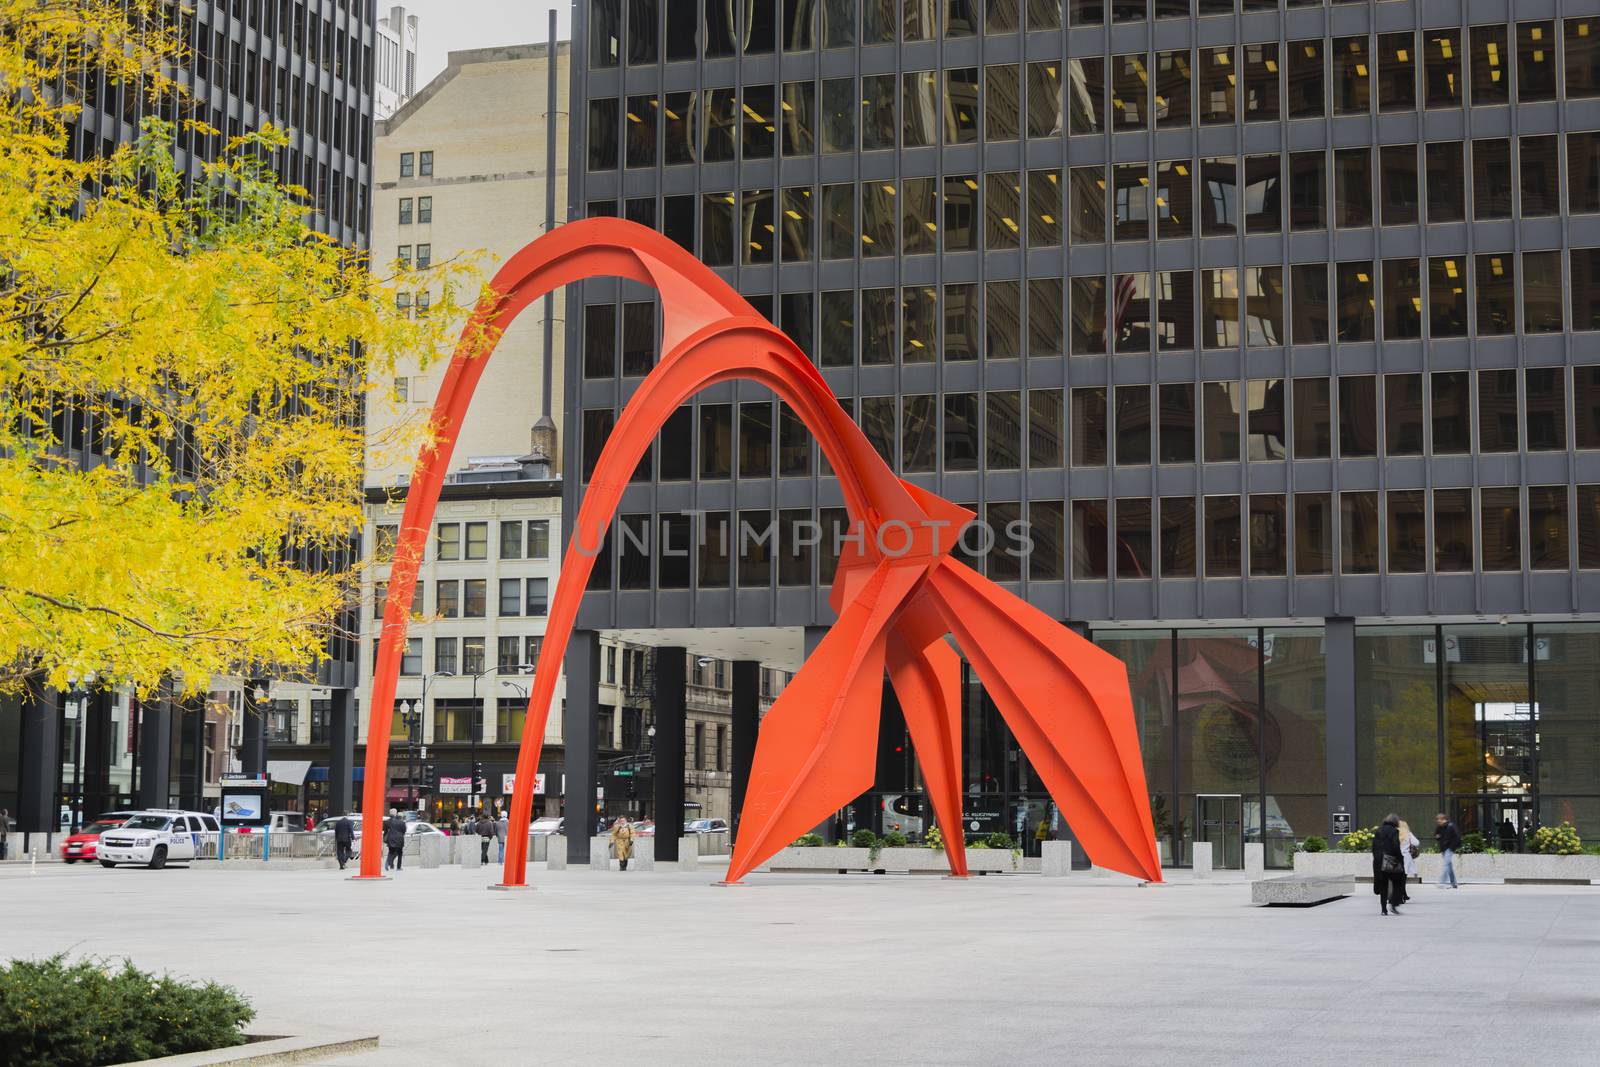 Red Flamingo sculpture in Chicago by rarrarorro